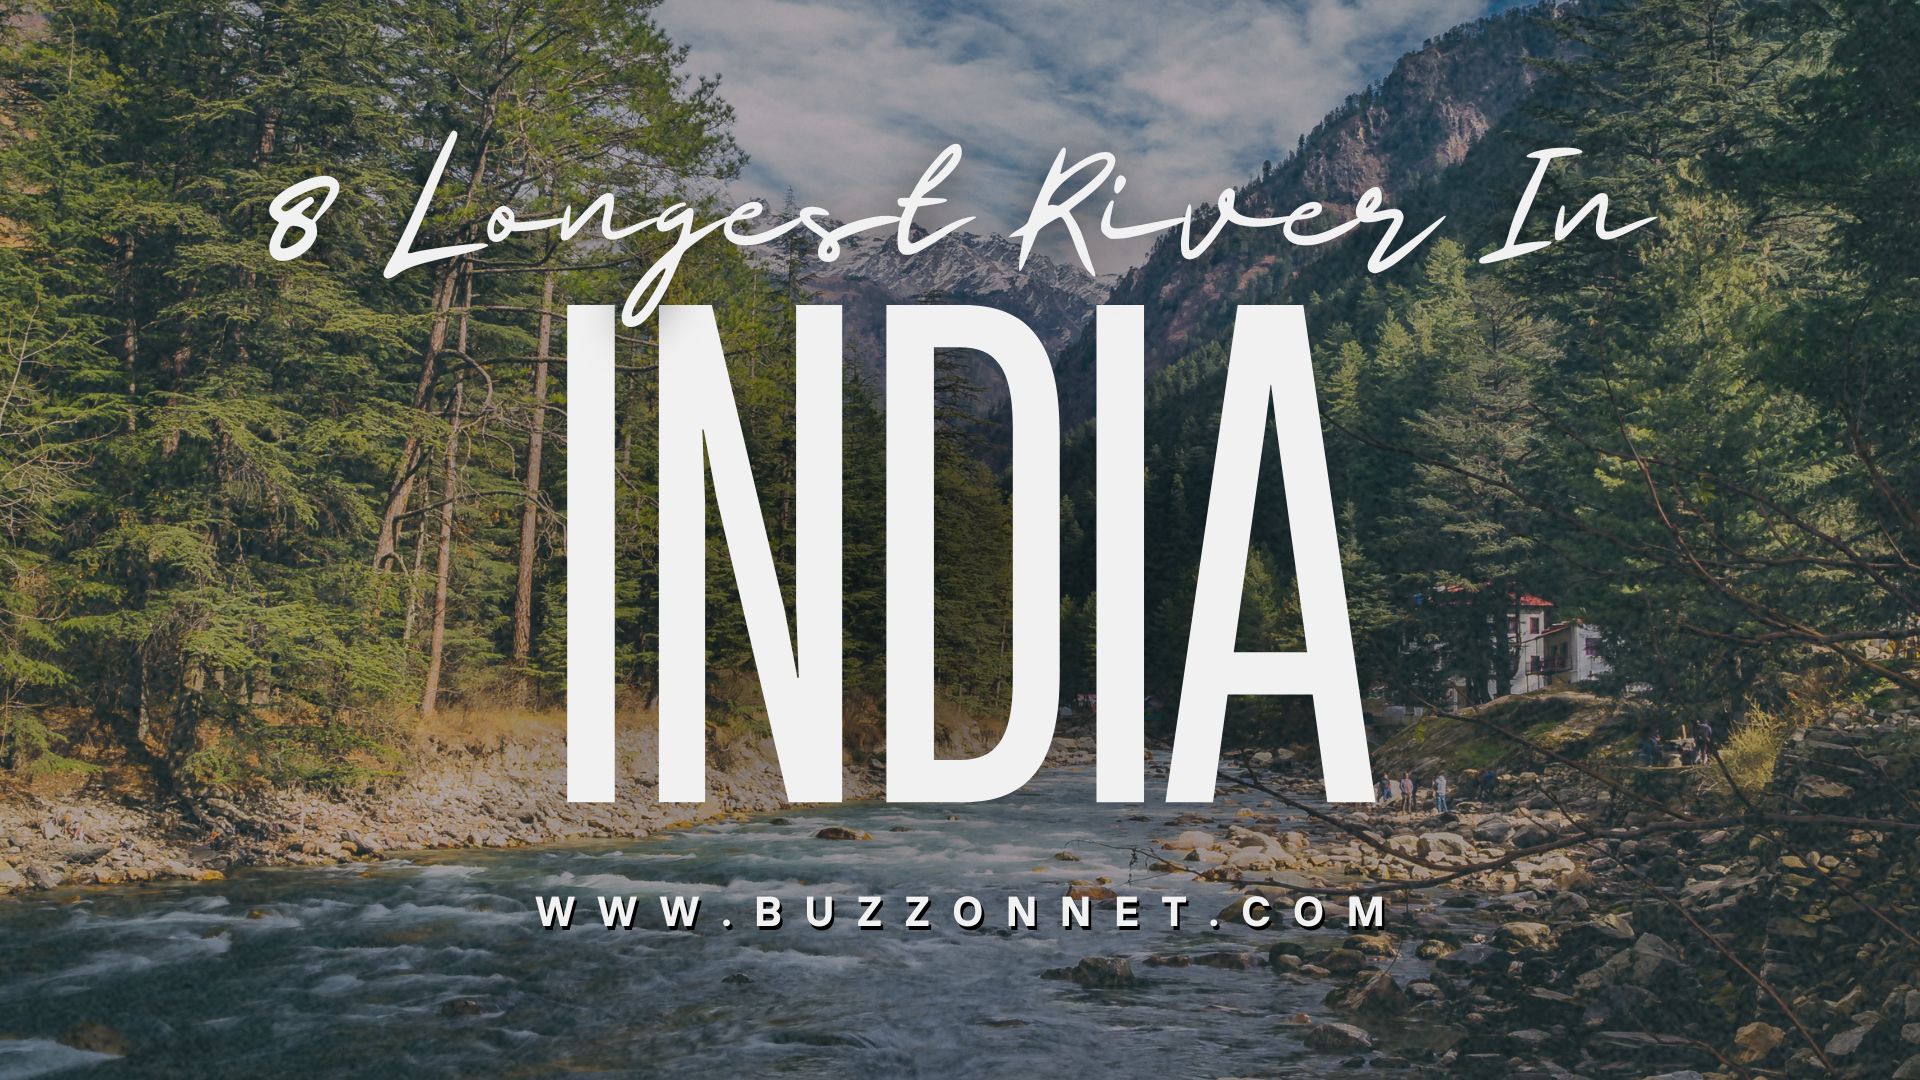 Longest River In India, Buzz on net